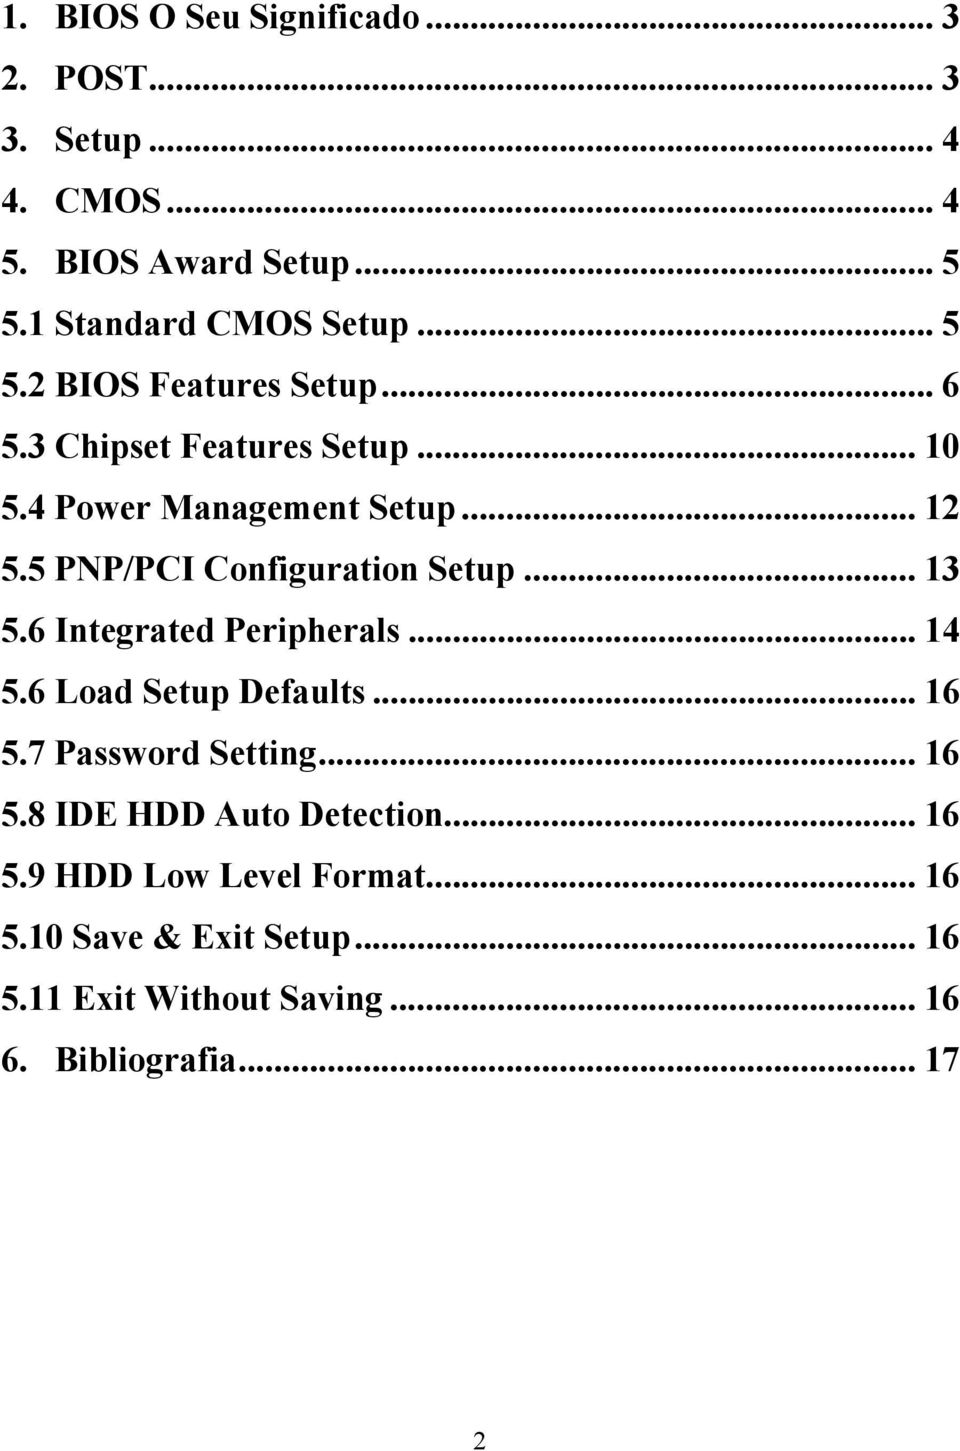 5 PNP/PCI Configuration Setup... 13 5.6 Integrated Peripherals... 14 5.6 Load Setup Defaults... 16 5.7 Password Setting.